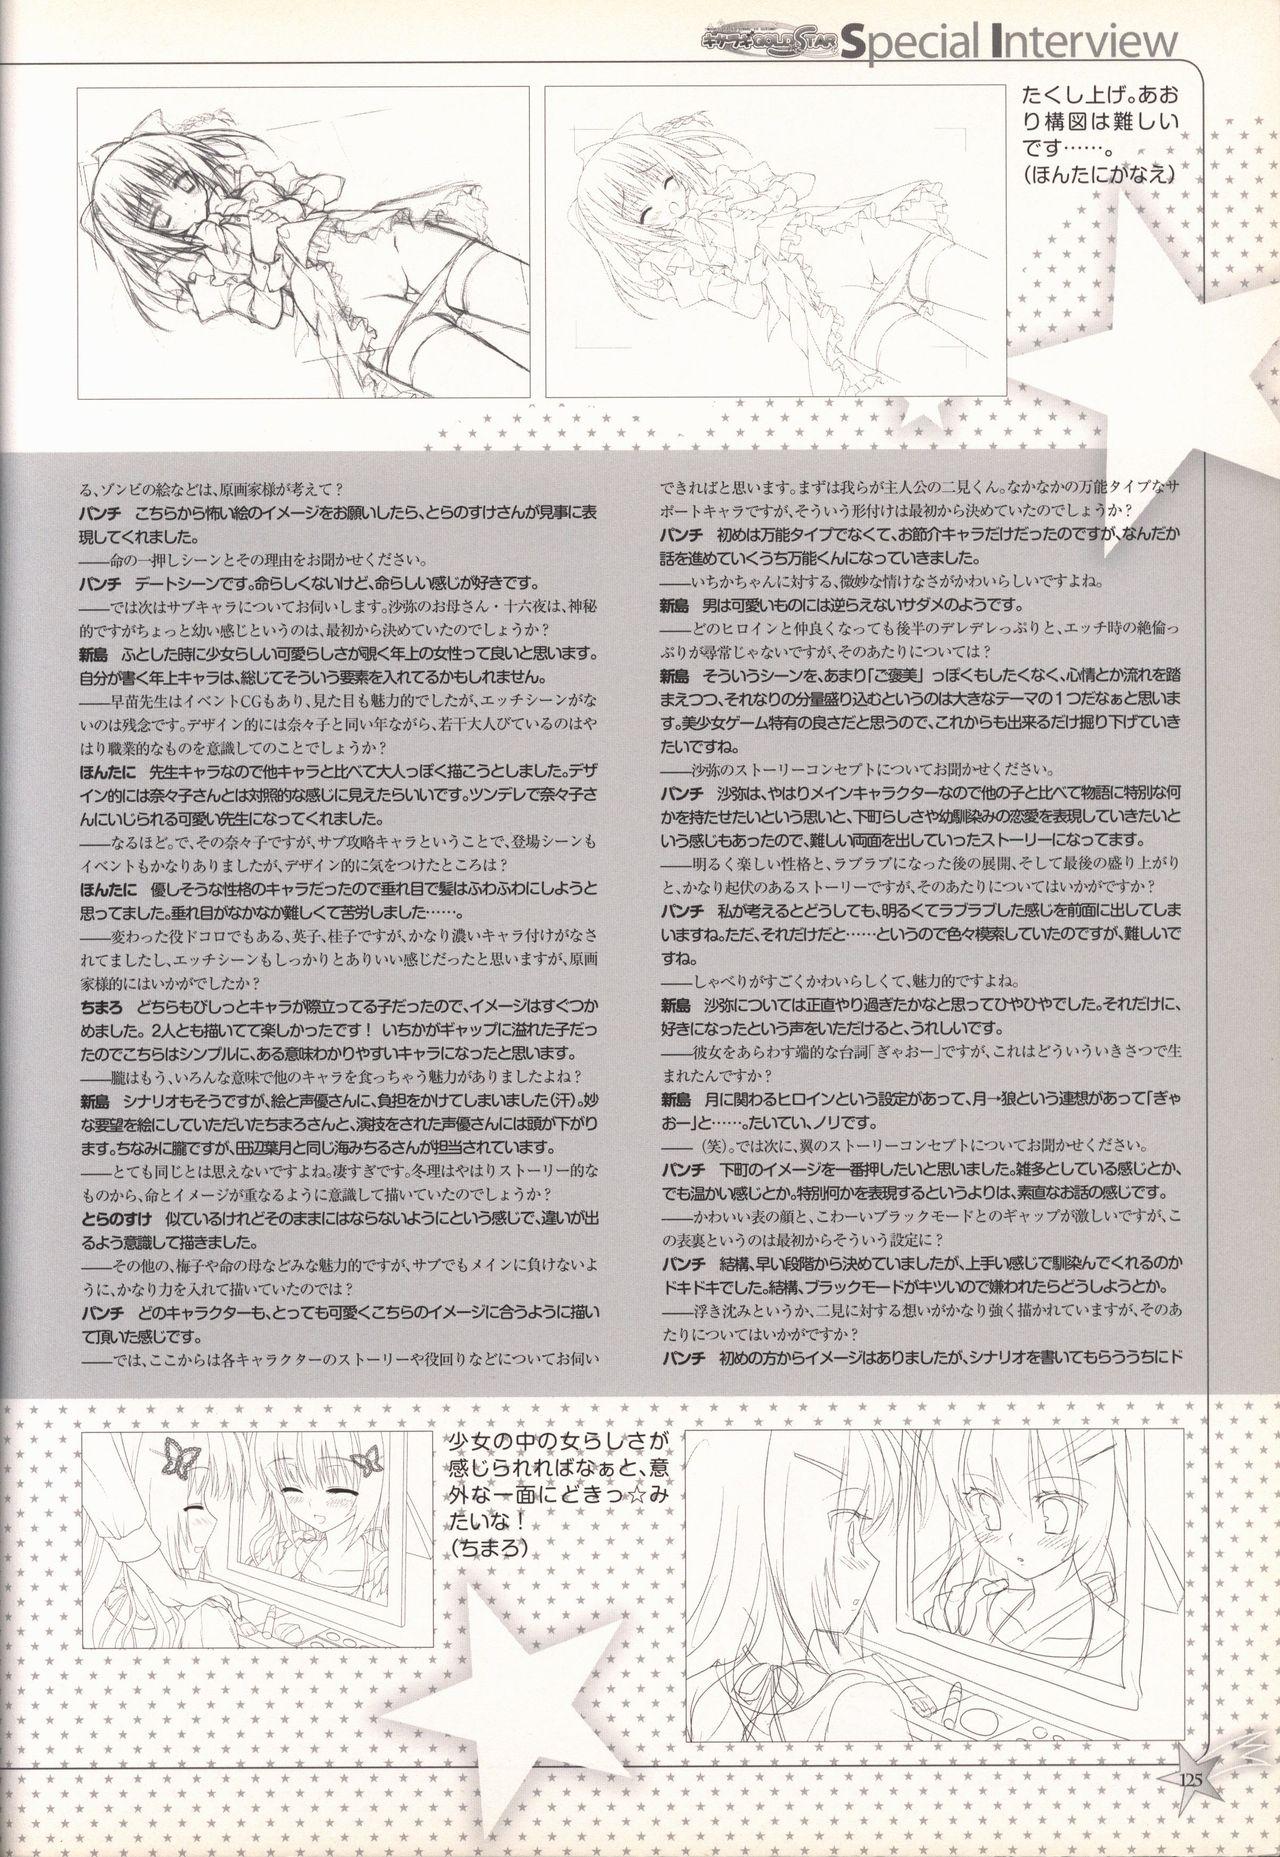 KisaragiGOLD★STAR Visual Fanbook 125